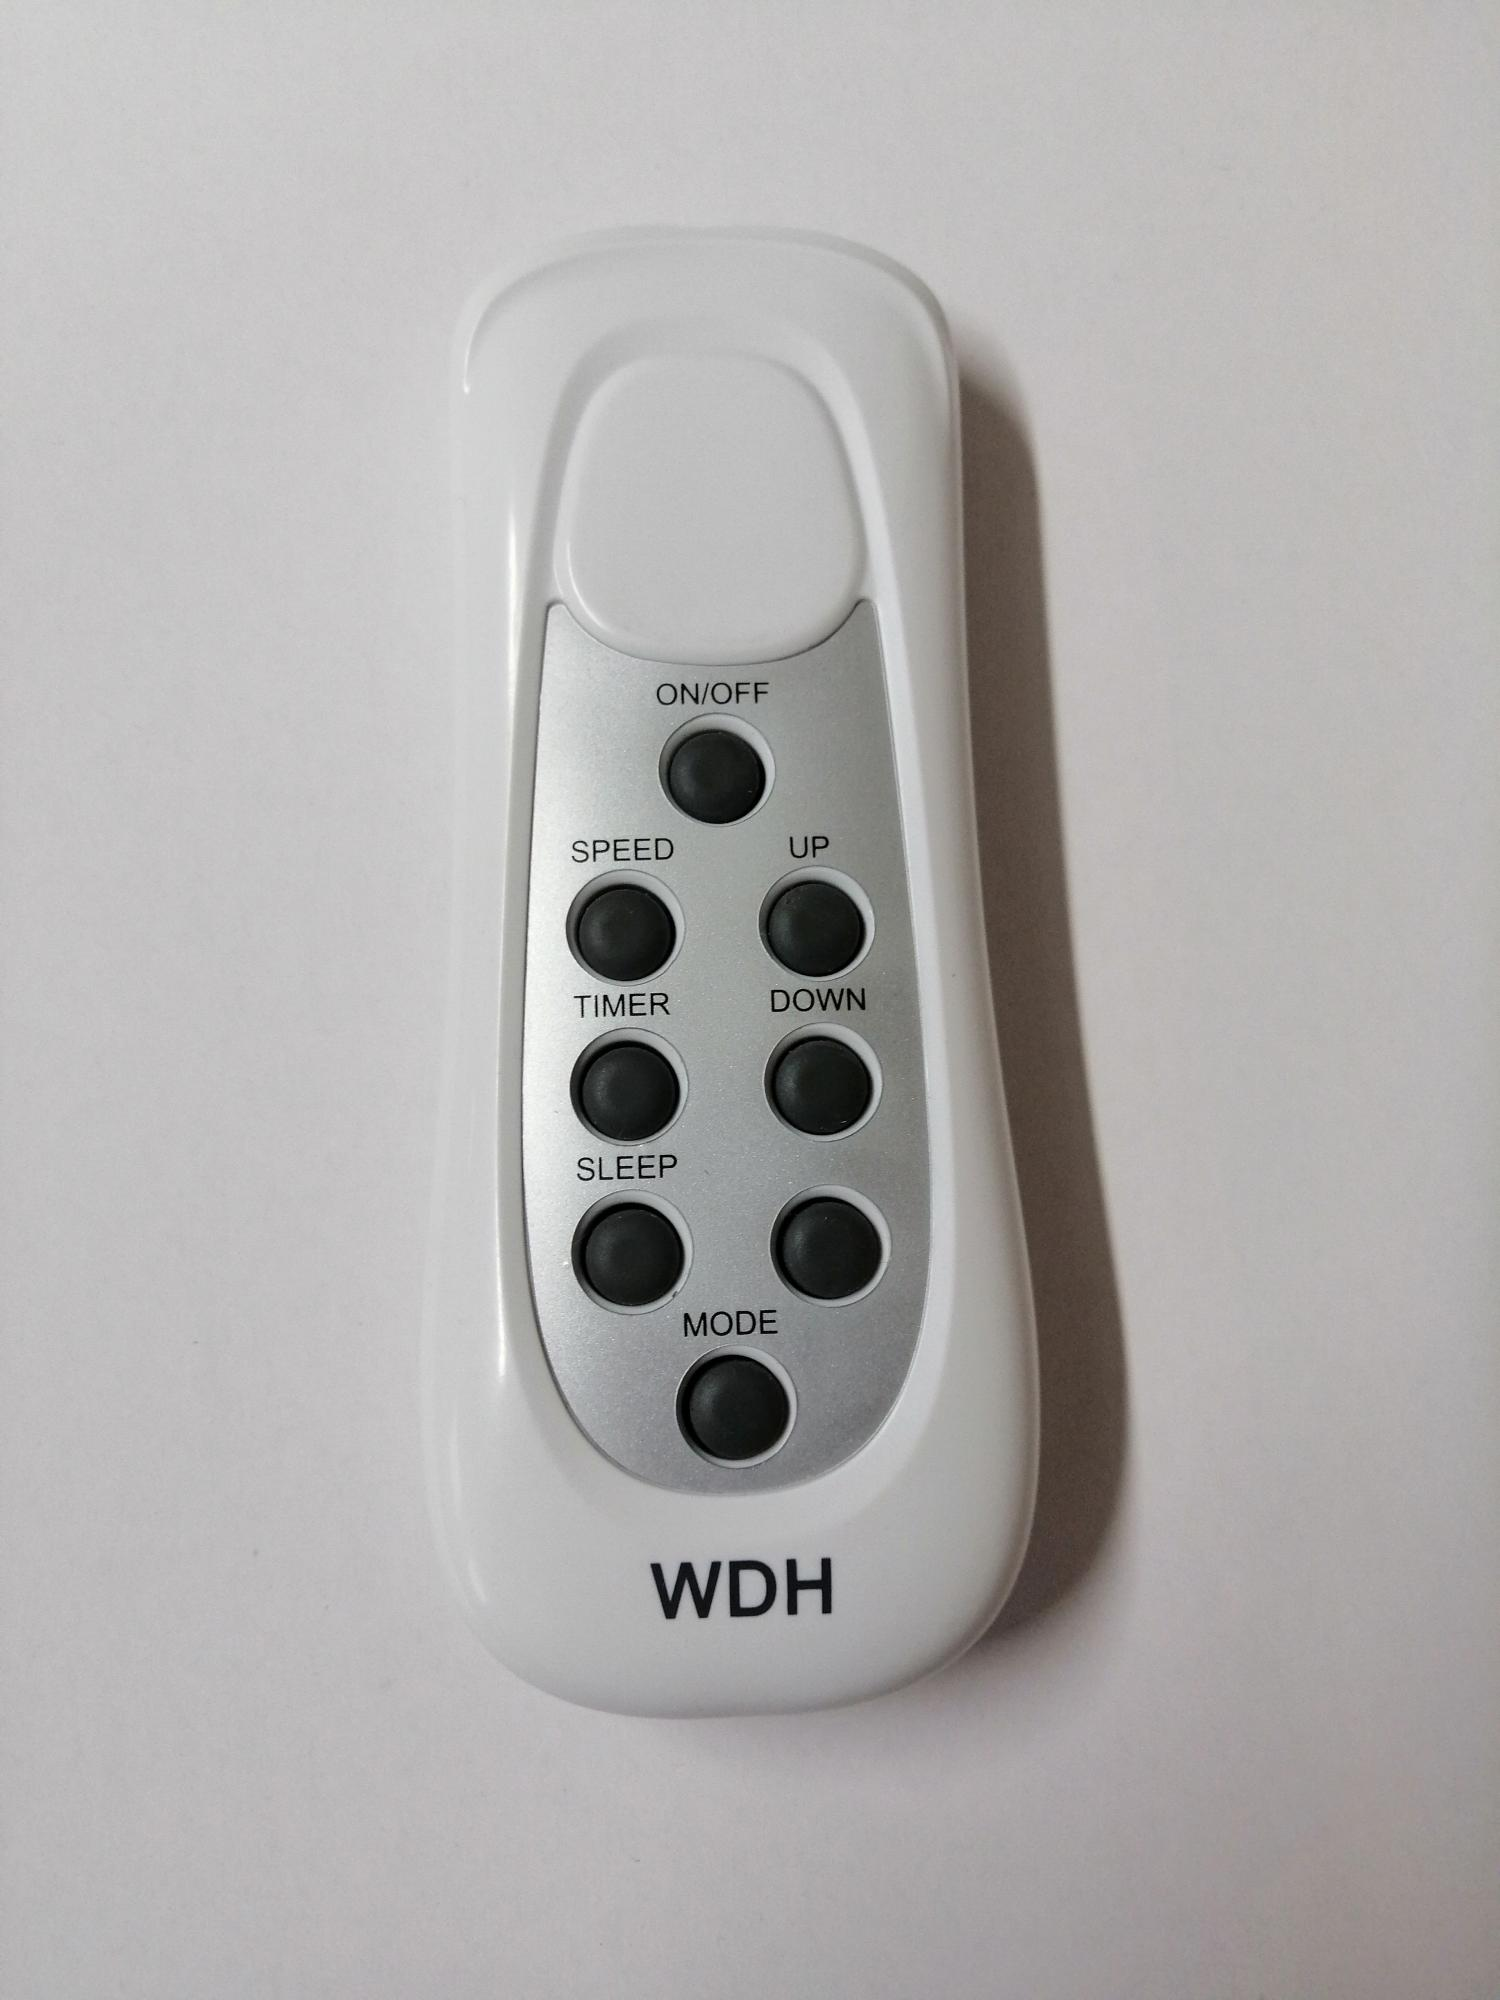 WDH Klimagerät 40 air EEK: (Max. conditioner Weiß m², Raumgröße: A) WDH-FGA1263B